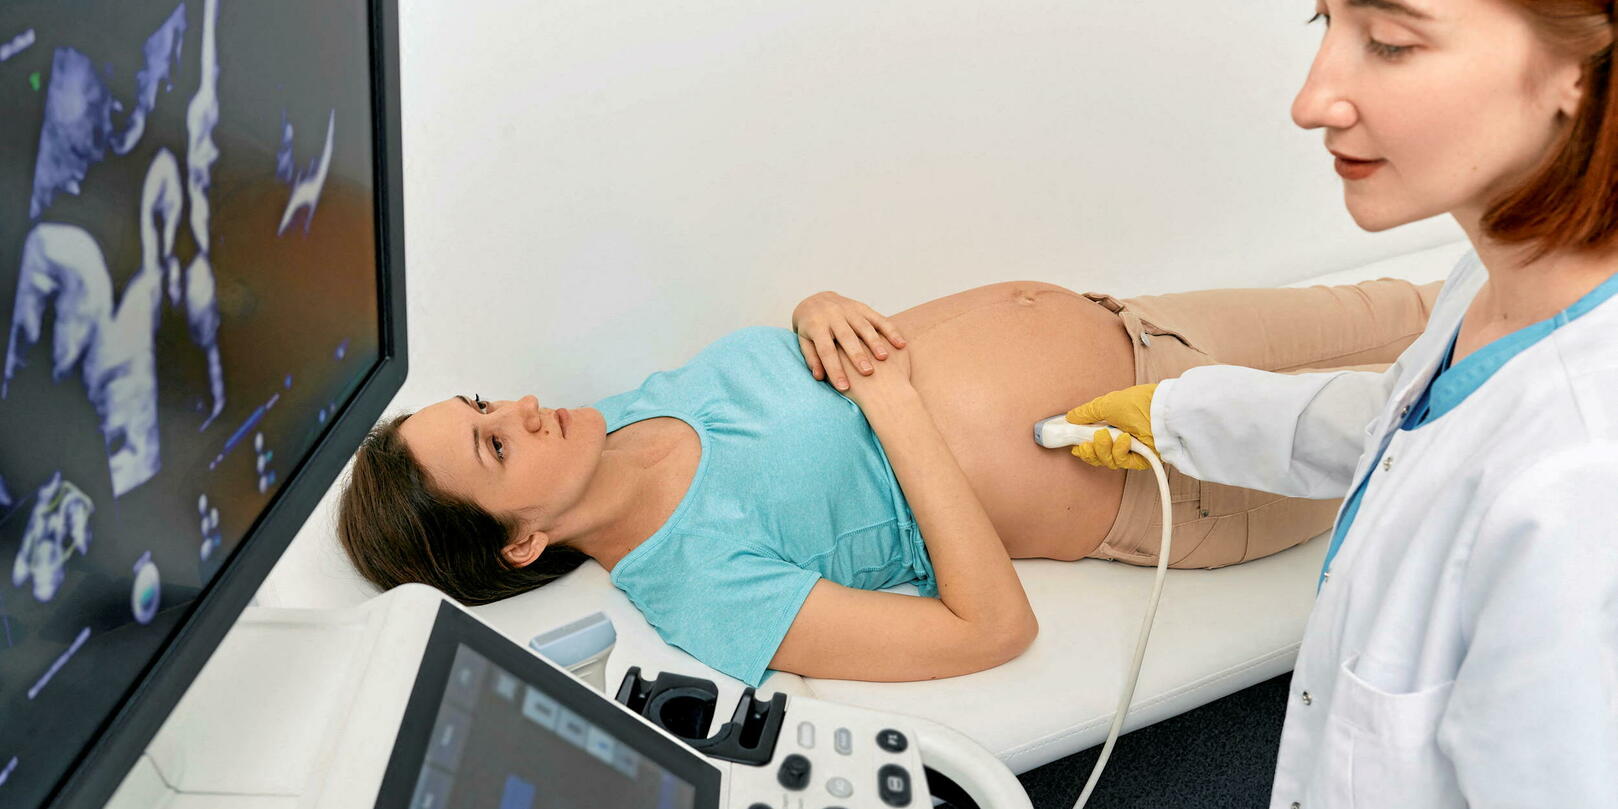 “pleasure” ultrasounds, a dangerous practice?